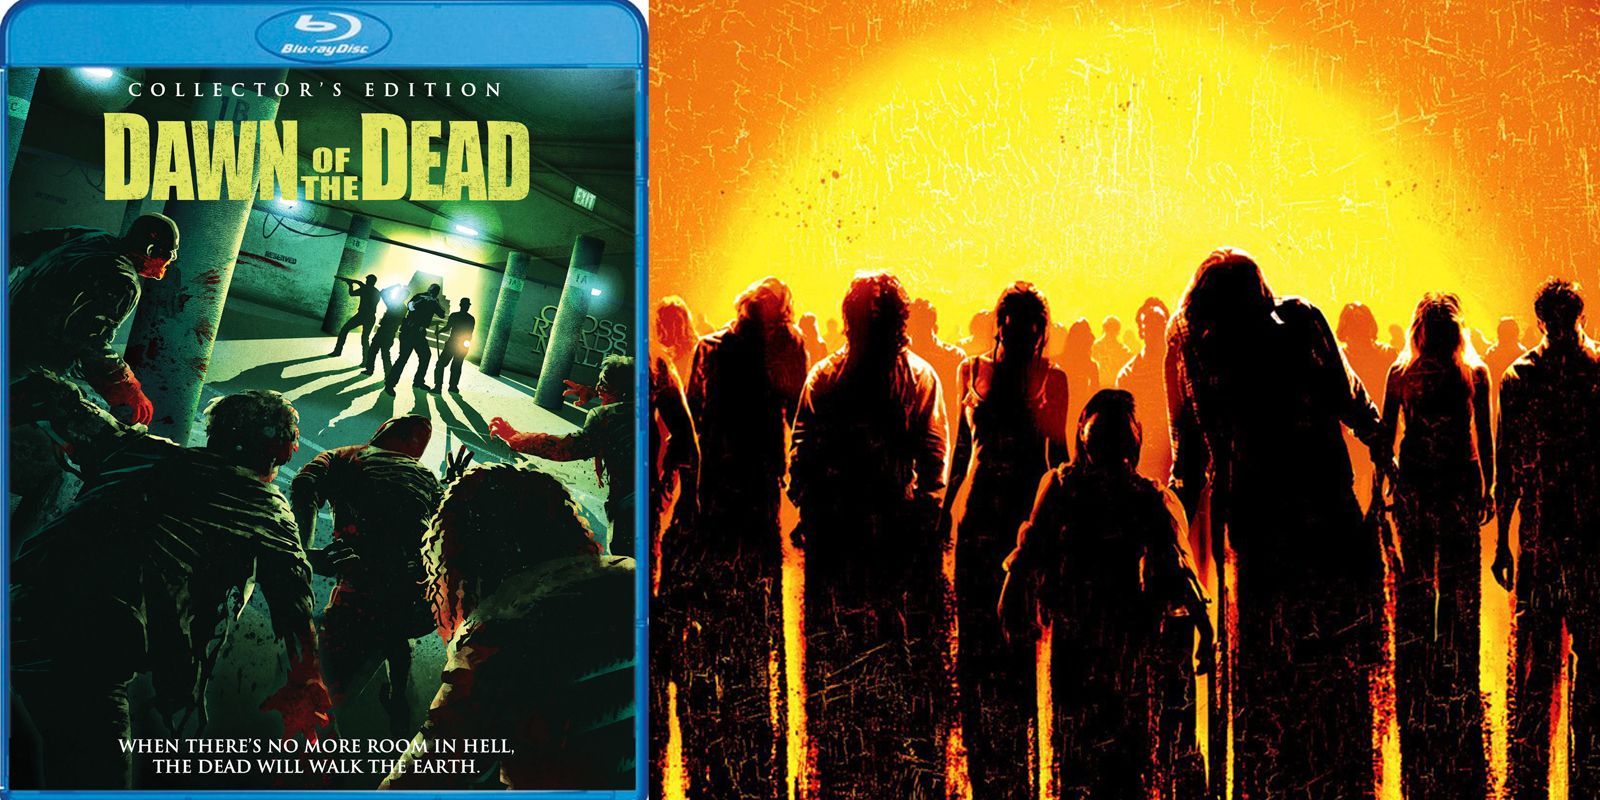 Dawn of the Dead Blu-ray and original artwork copy